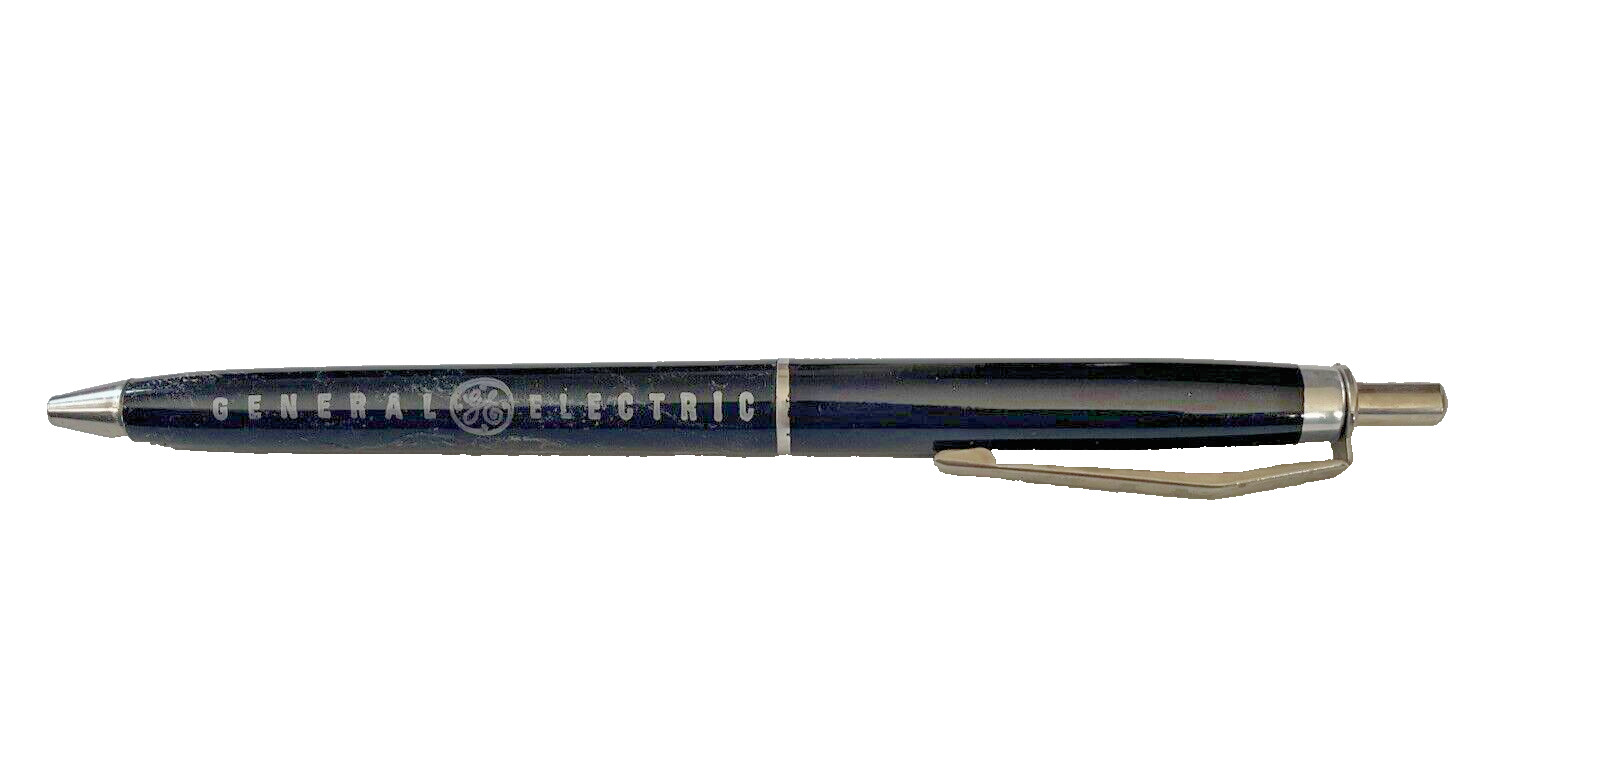 Vintage General Electric Black Pen Advertisement Original Cellophane Packaging